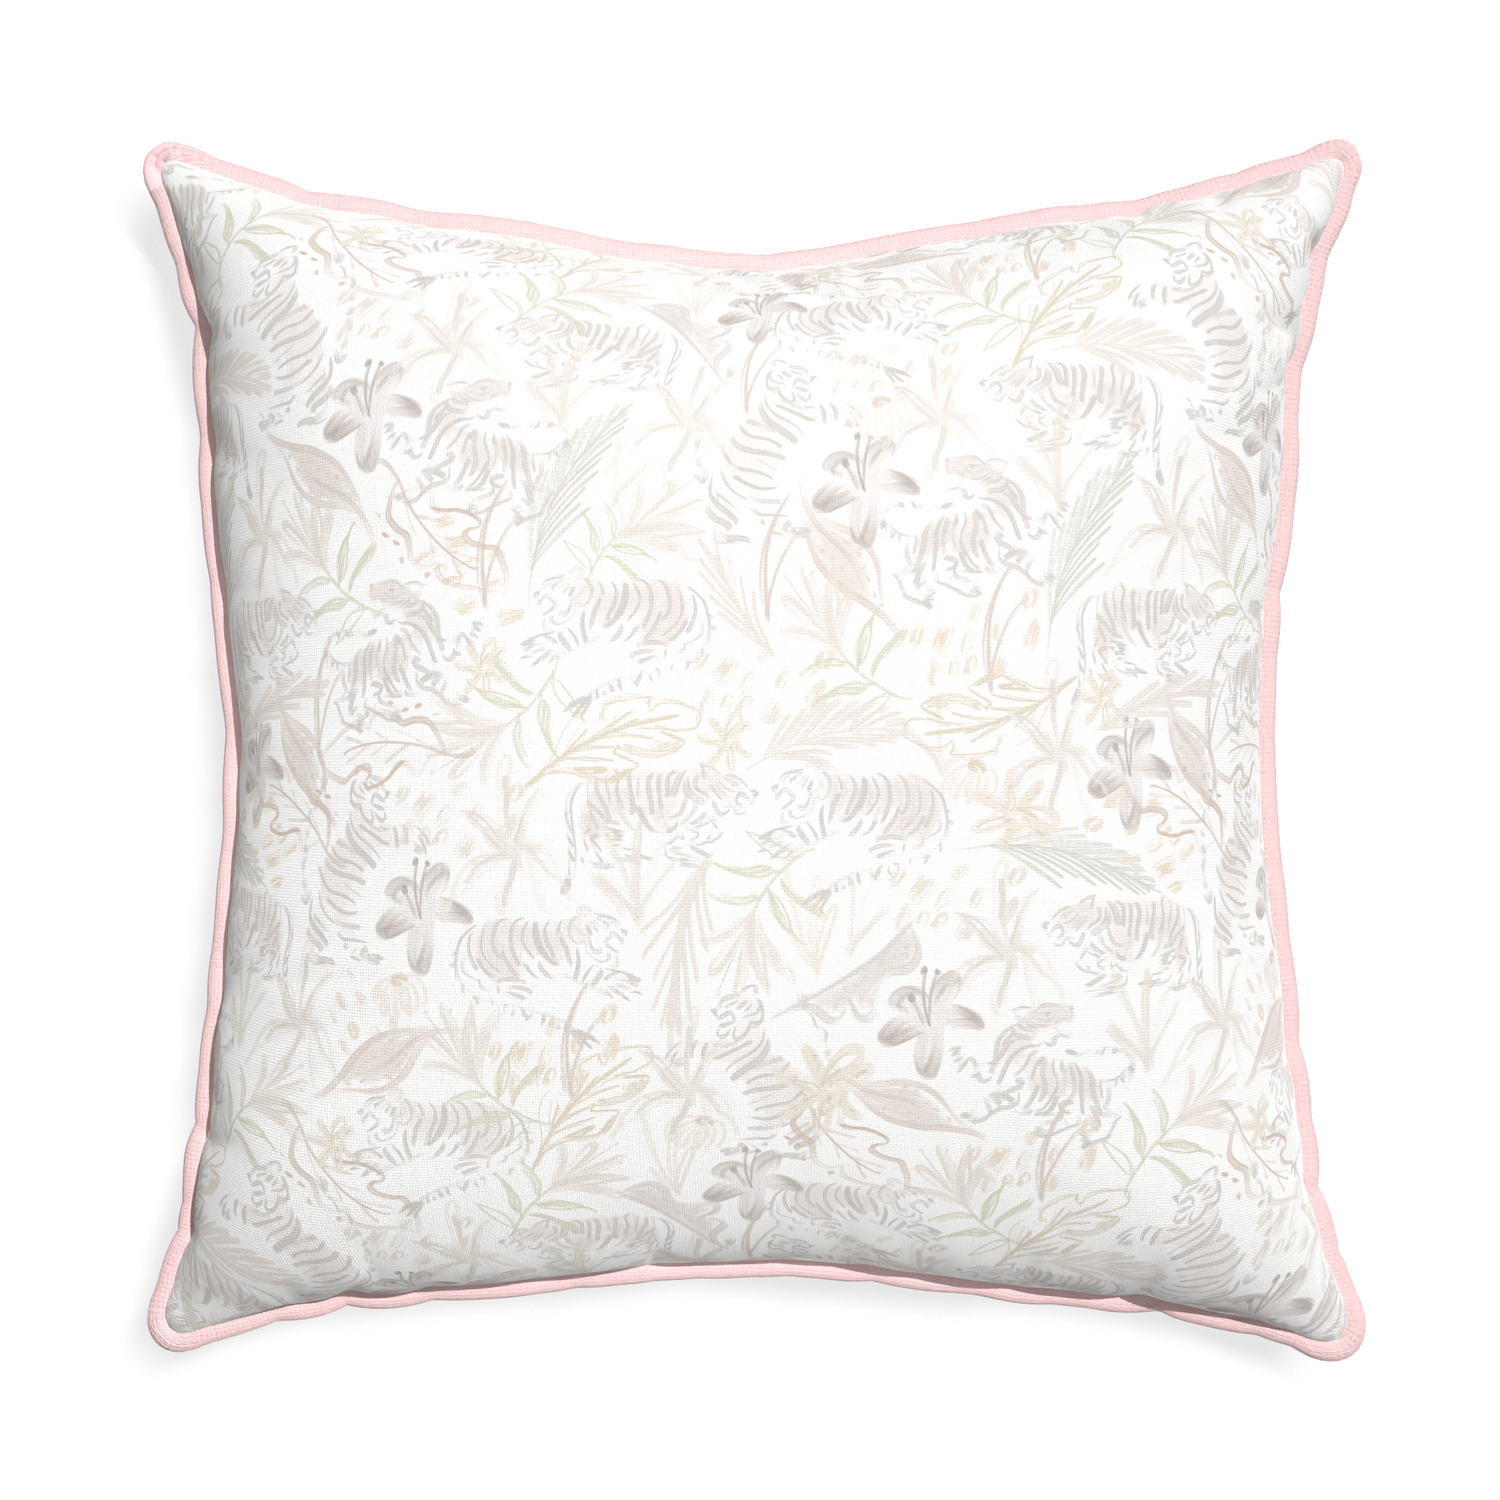 Euro-sham frida sand custom pillow with petal piping on white background